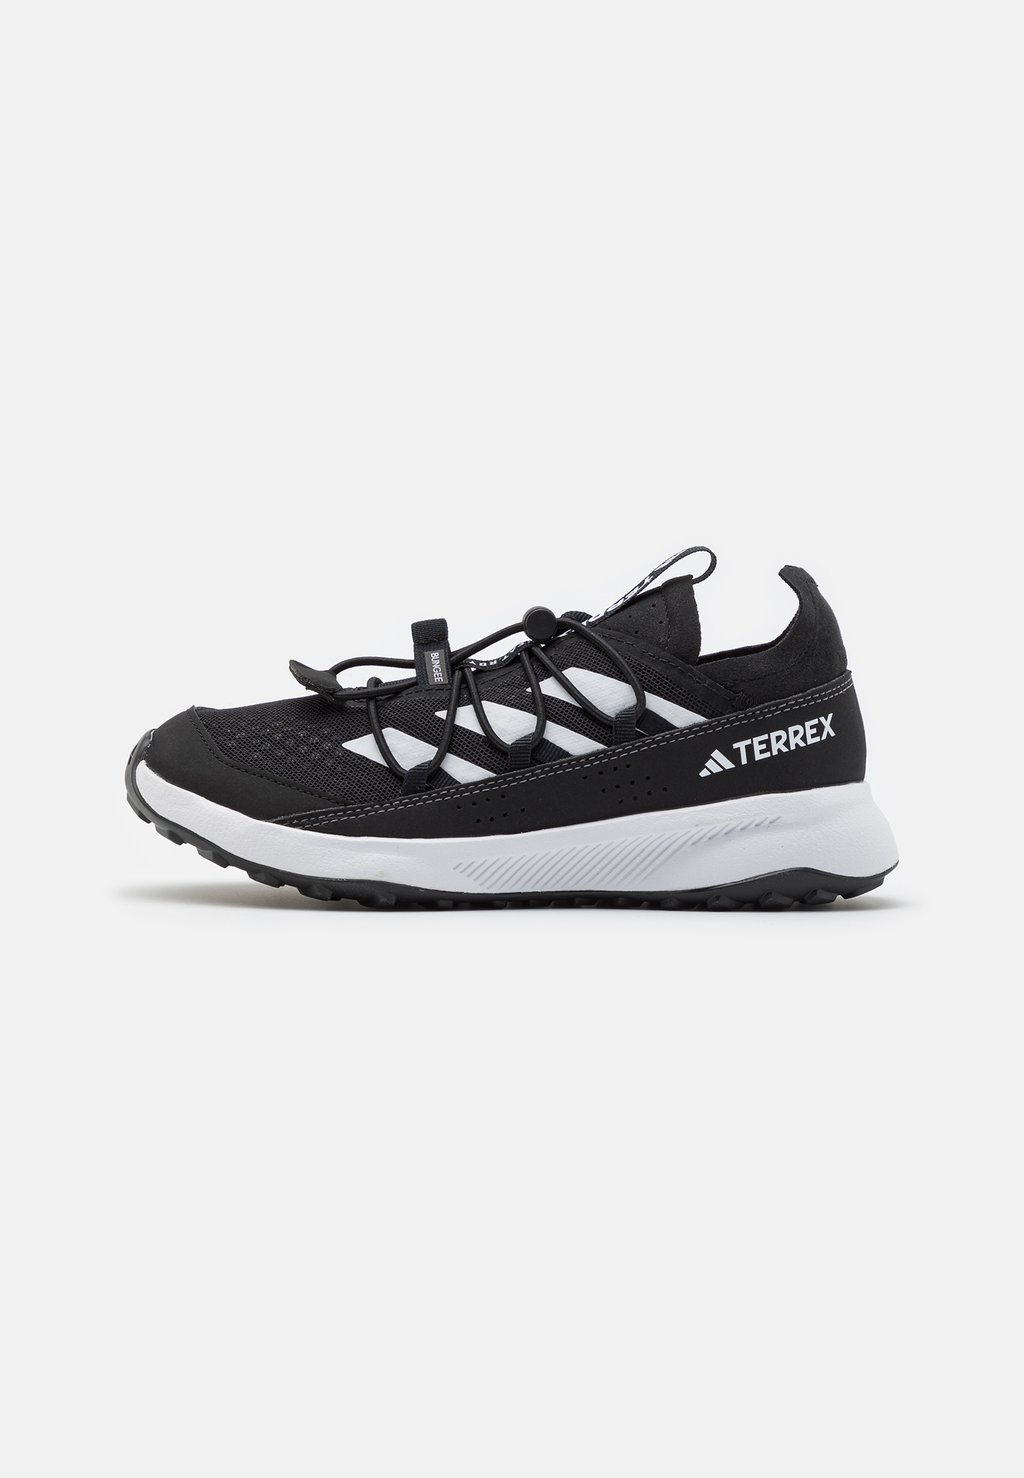 Кроссовки Terrex Voyager 21 Heat.Rdy Unisex Adidas, цвет core black/footwear white/grey five